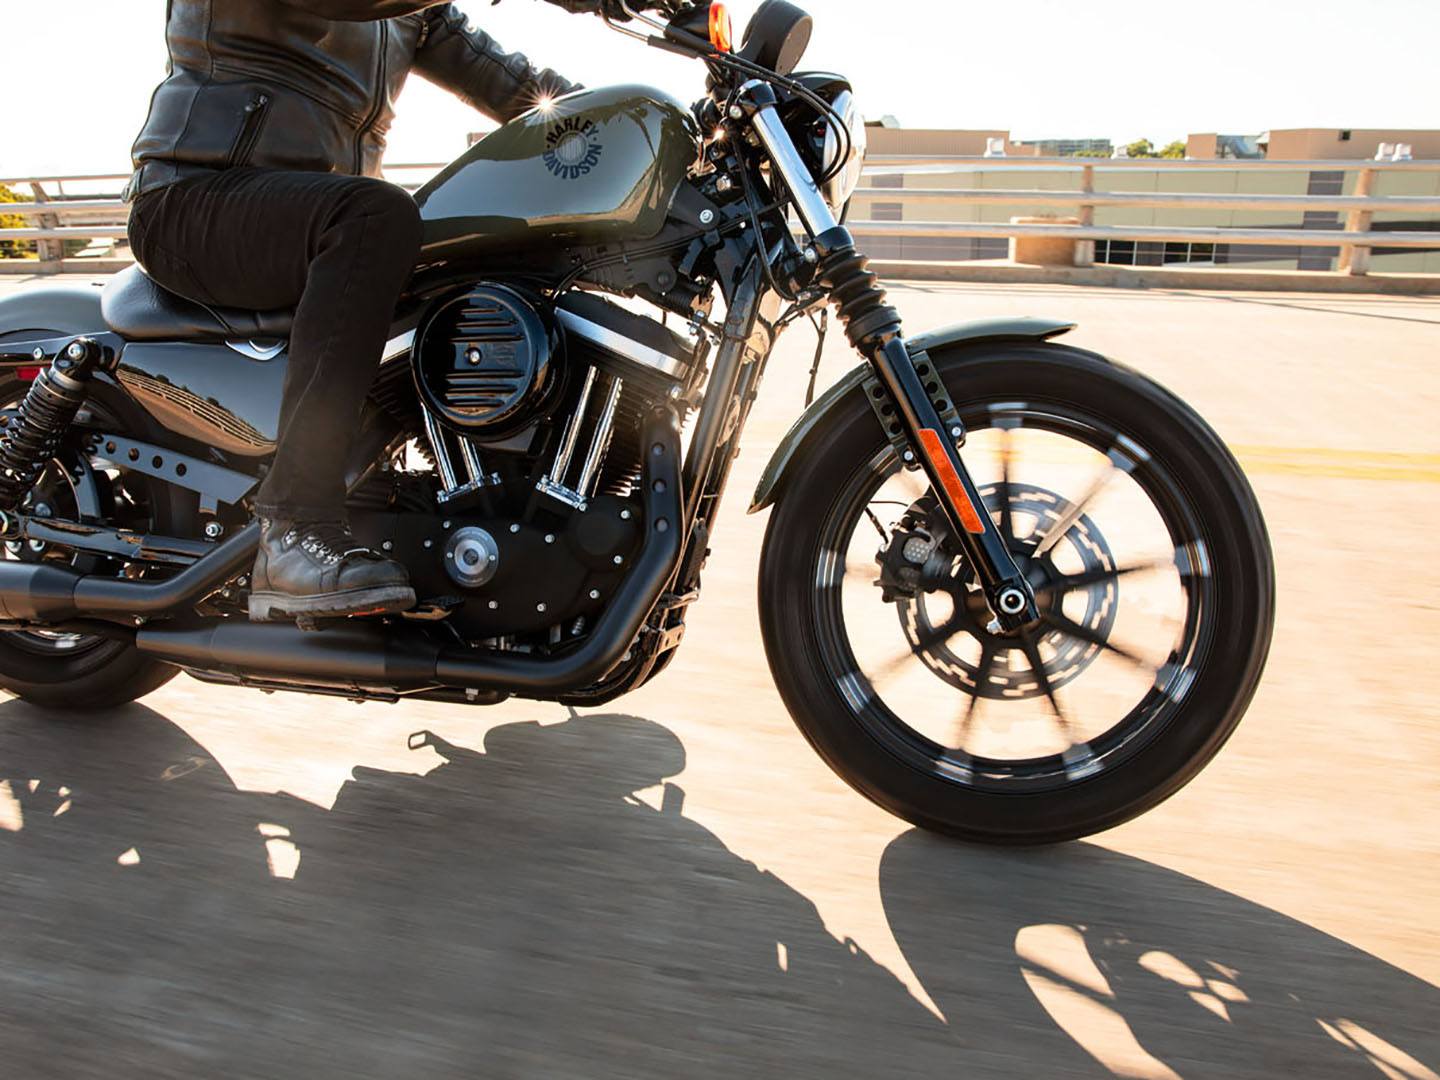 2021 Harley-Davidson Iron 883™ in Cincinnati, Ohio - Photo 9